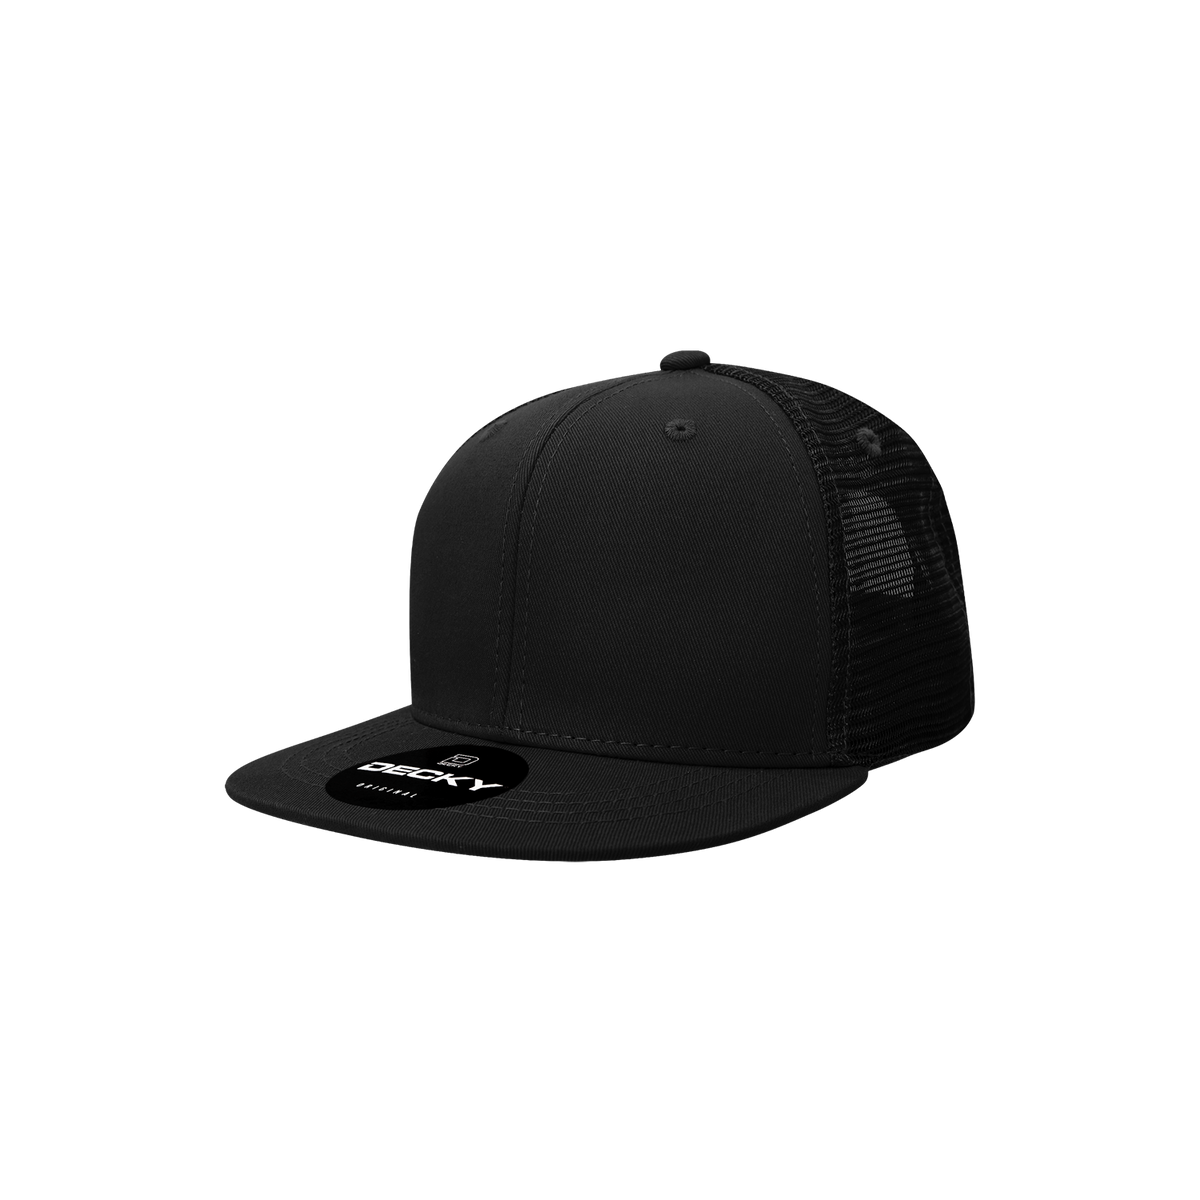 Skateboard Big Head Trucker Blank Black Baseball Cap With Full Closure Mens  Hip Hop Snapback Hat With Flat Visor B300K From Enyqb, $24.02